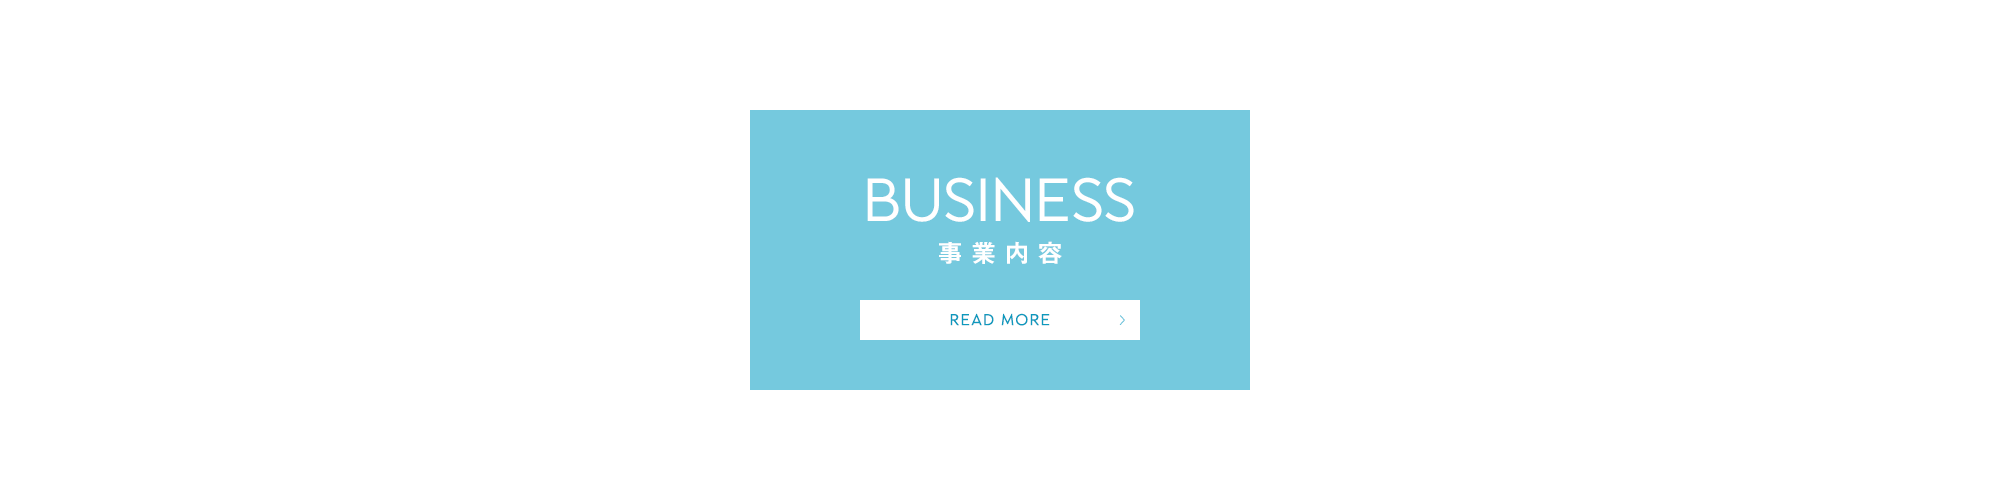 bnr_business_front